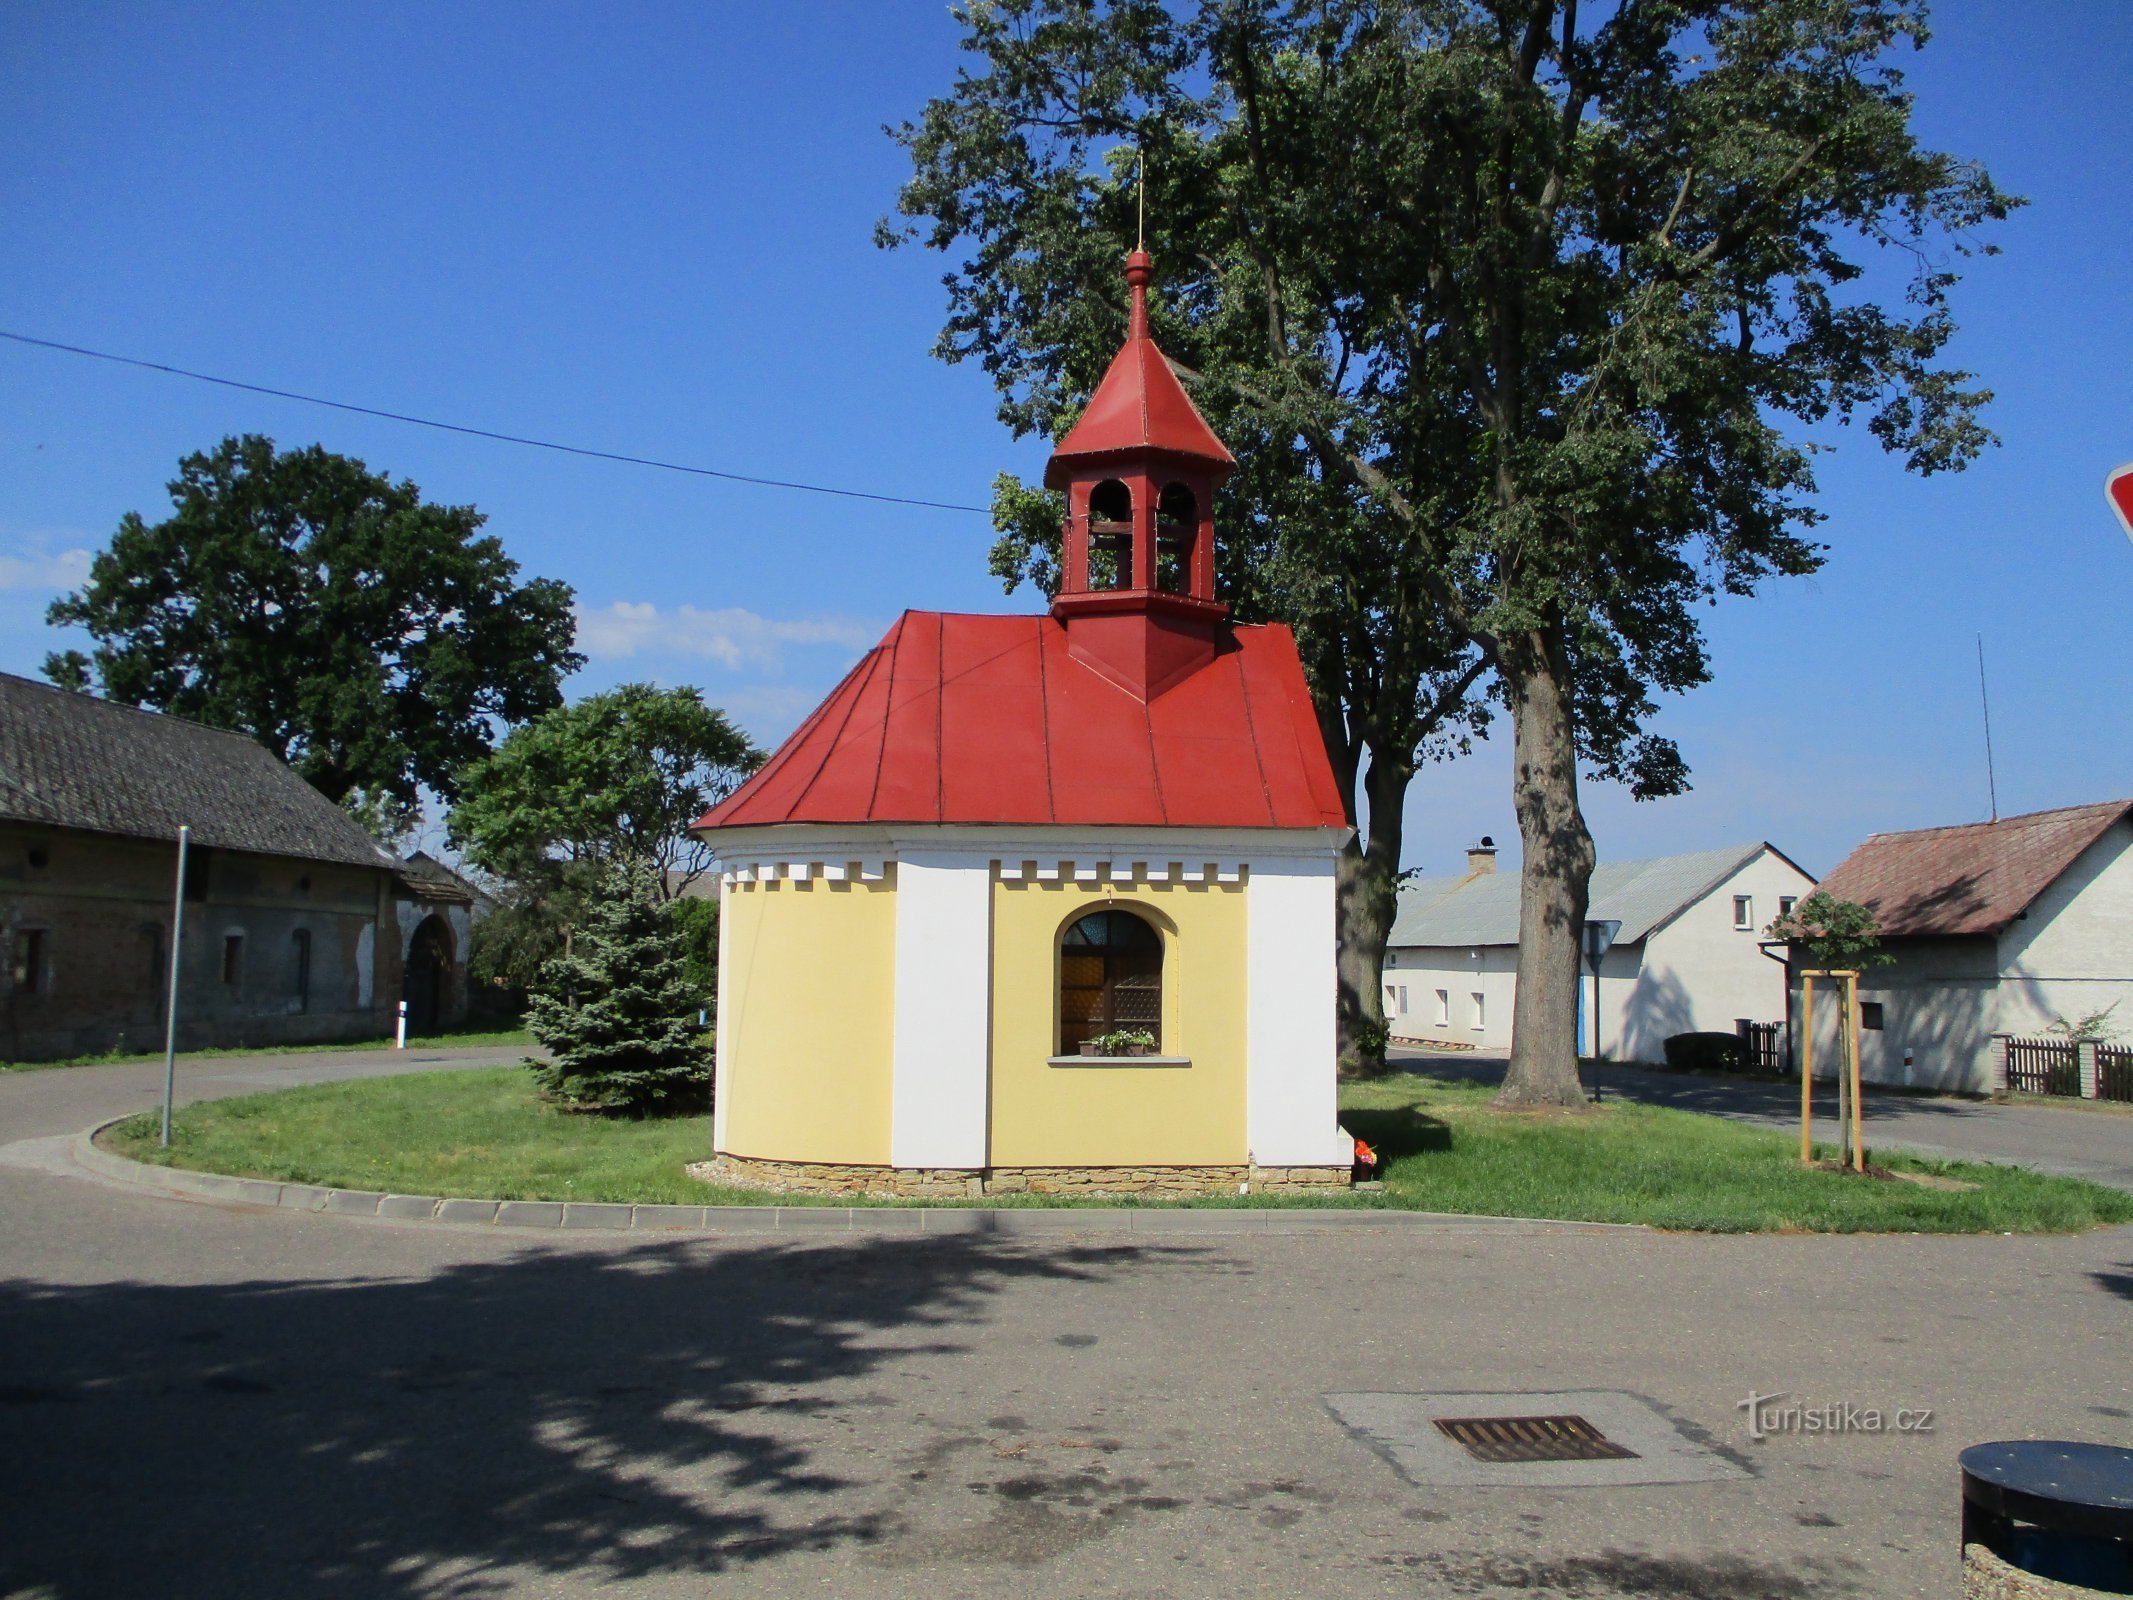 Chapel of St. Ludmily (Městec, 19.6.2019/XNUMX/XNUMX)